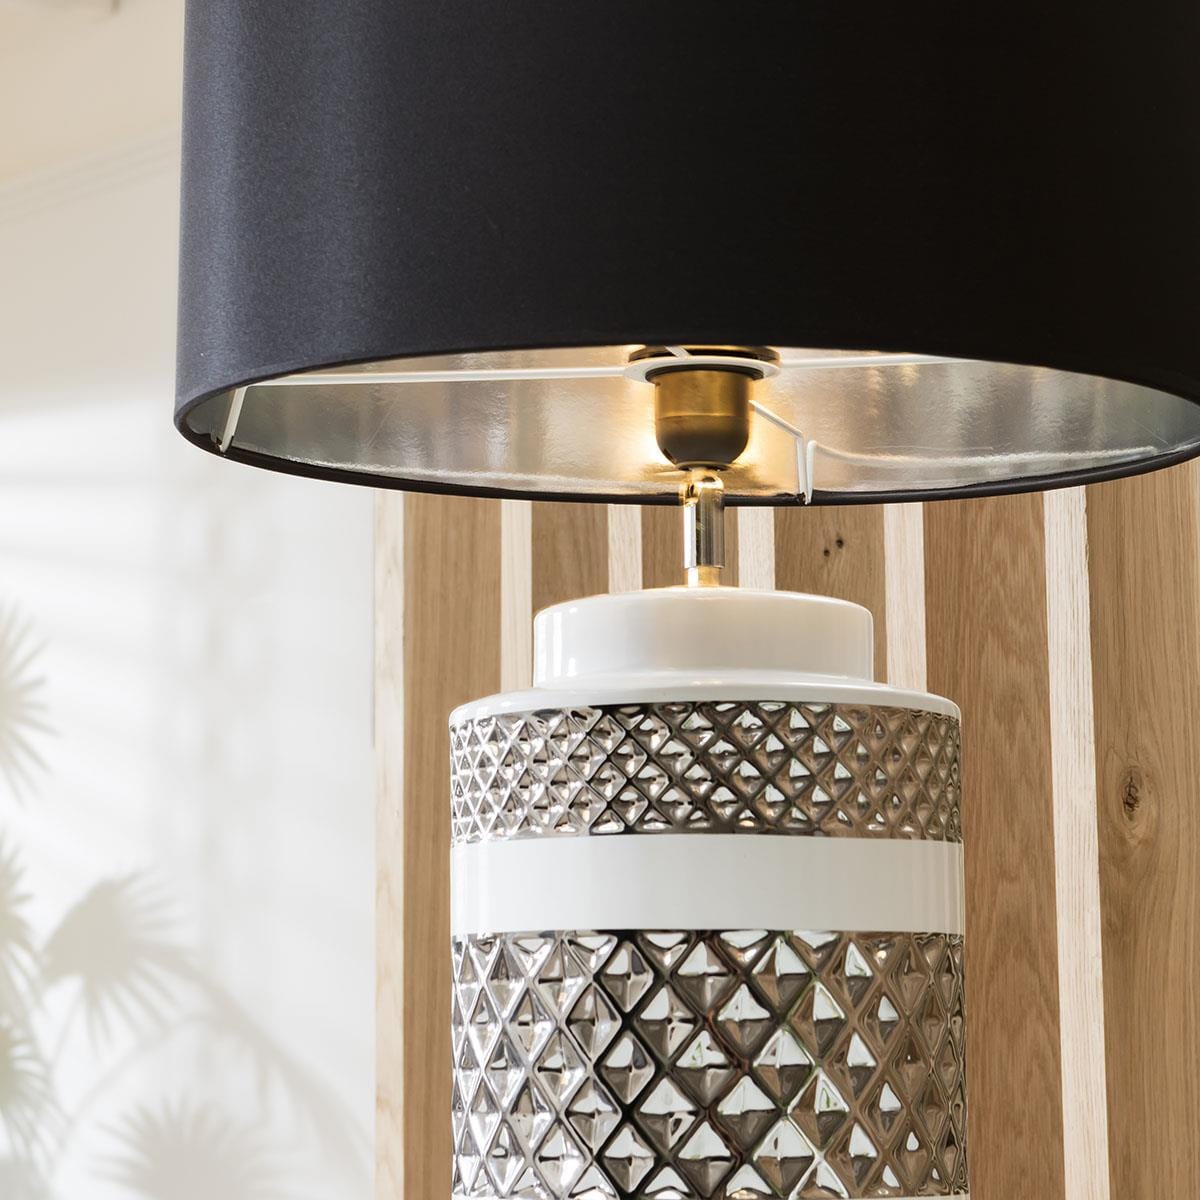 Quatropi Quatropi Table Lamp 64cm Tall - Black Drum Shade, White & Silver Detailing